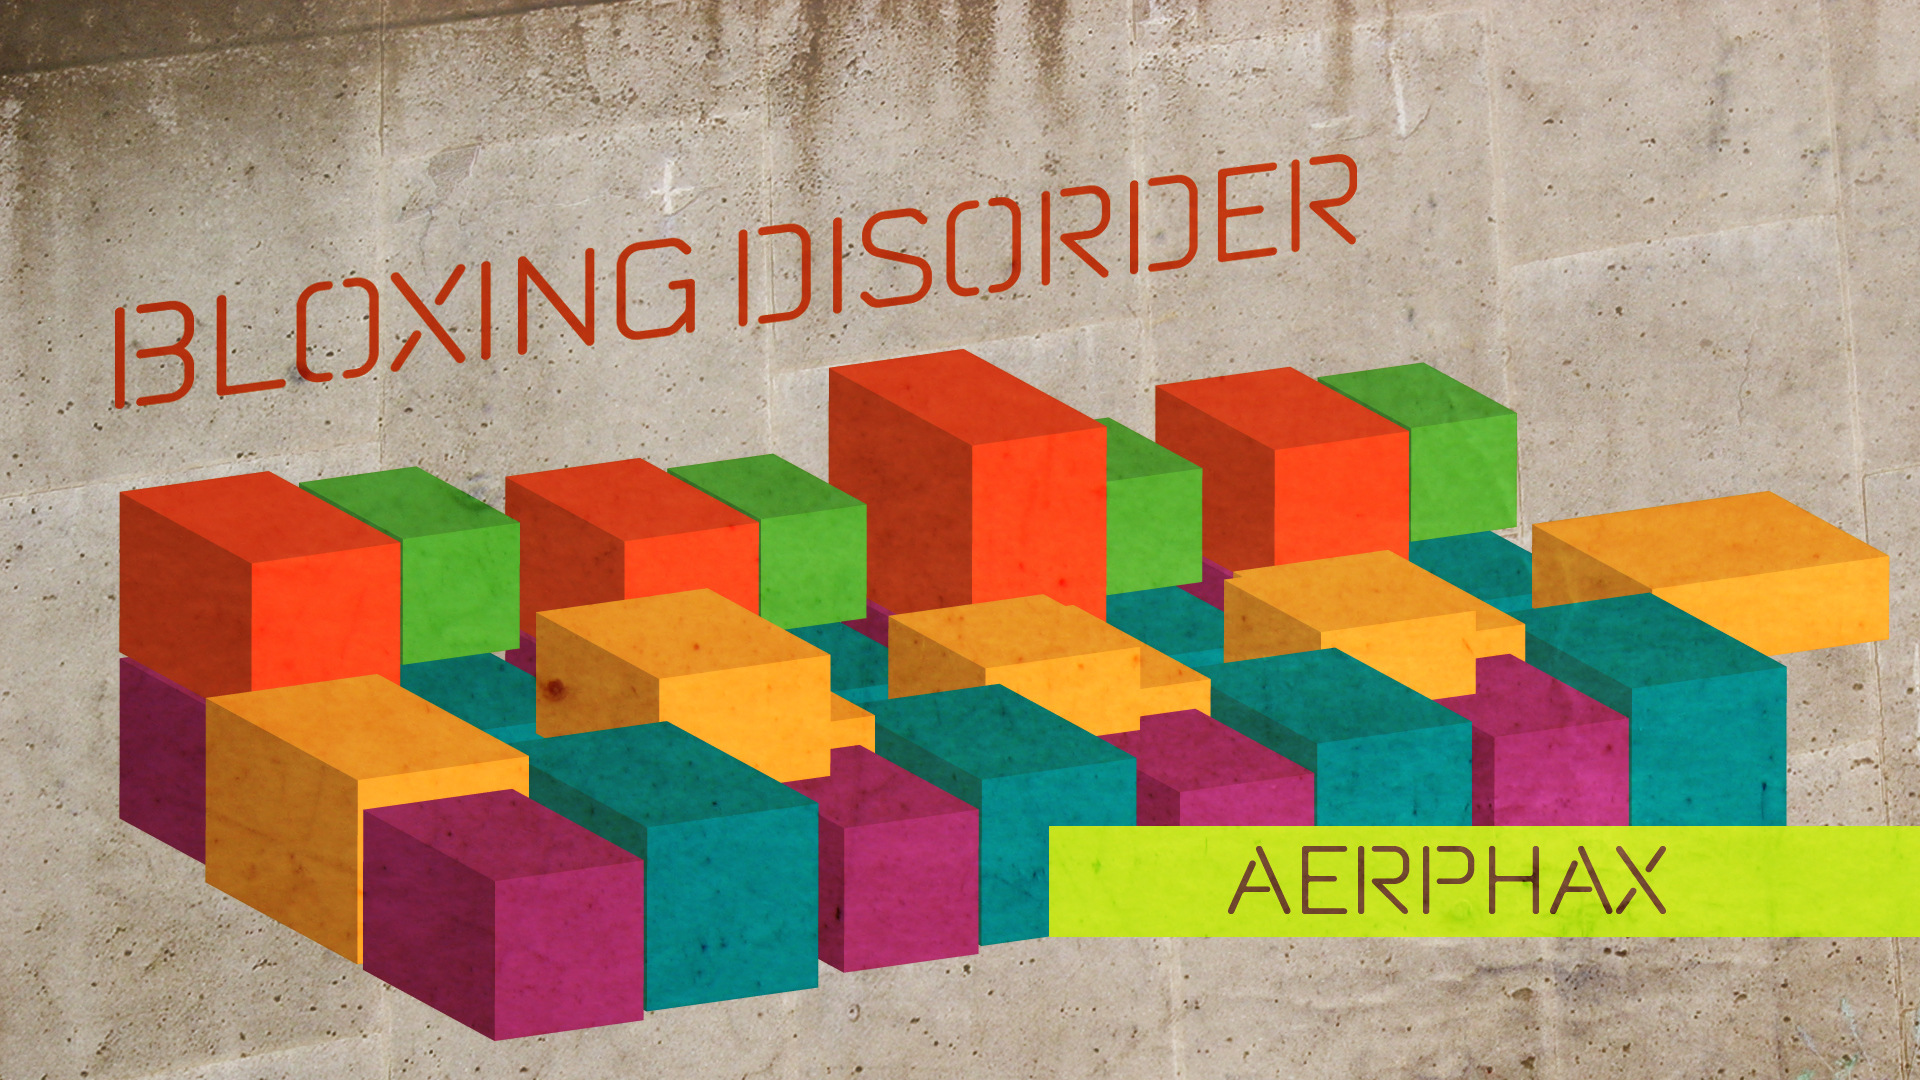 AERPHAX - Bloxing disorder - COVER ART DESIGN